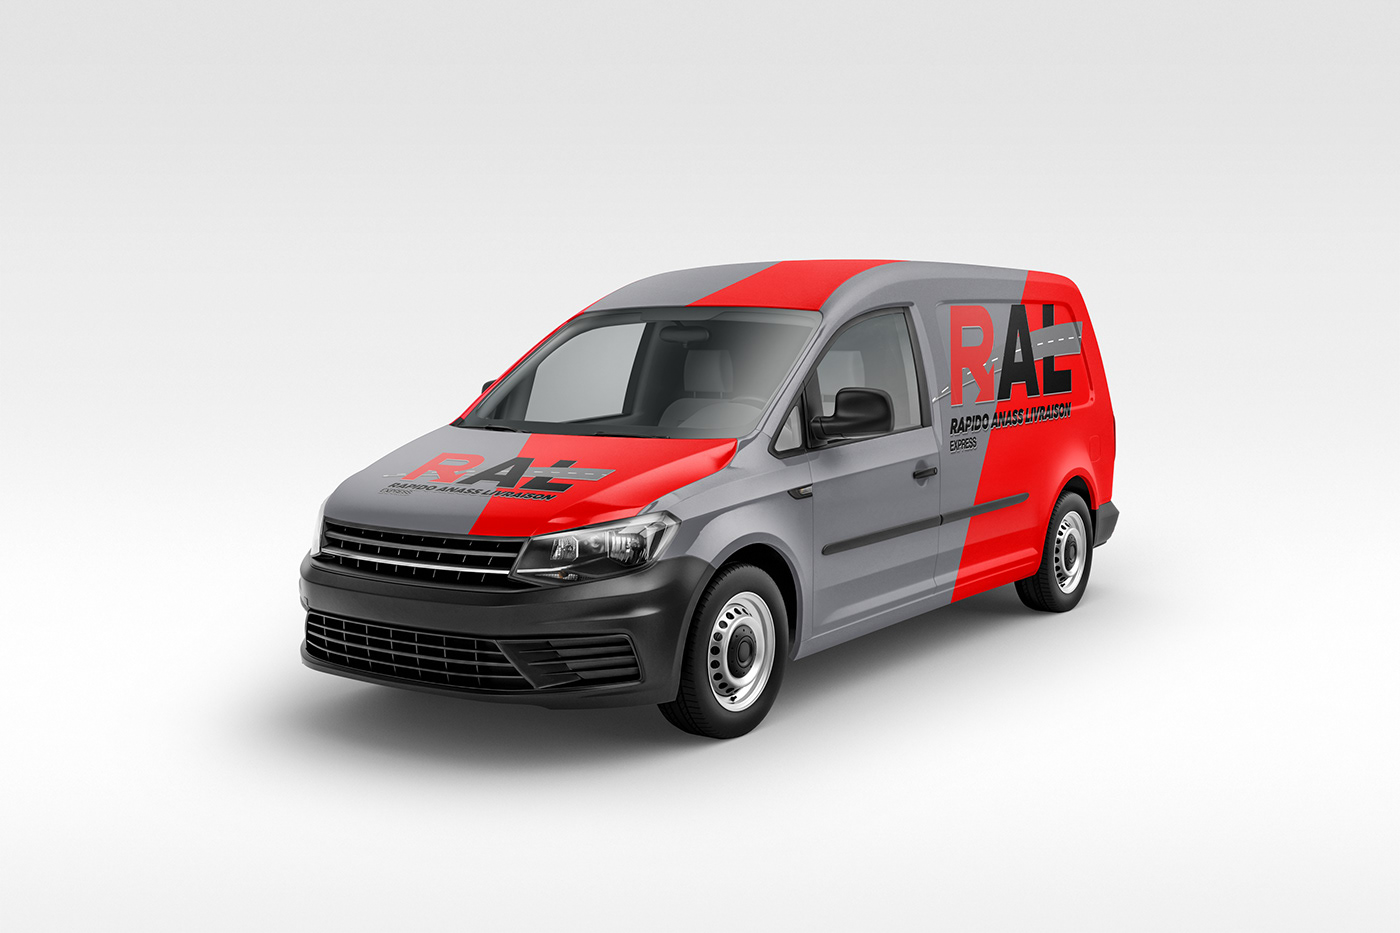 car Cars delivery express livraison Logistics logo Packaging Transport vector